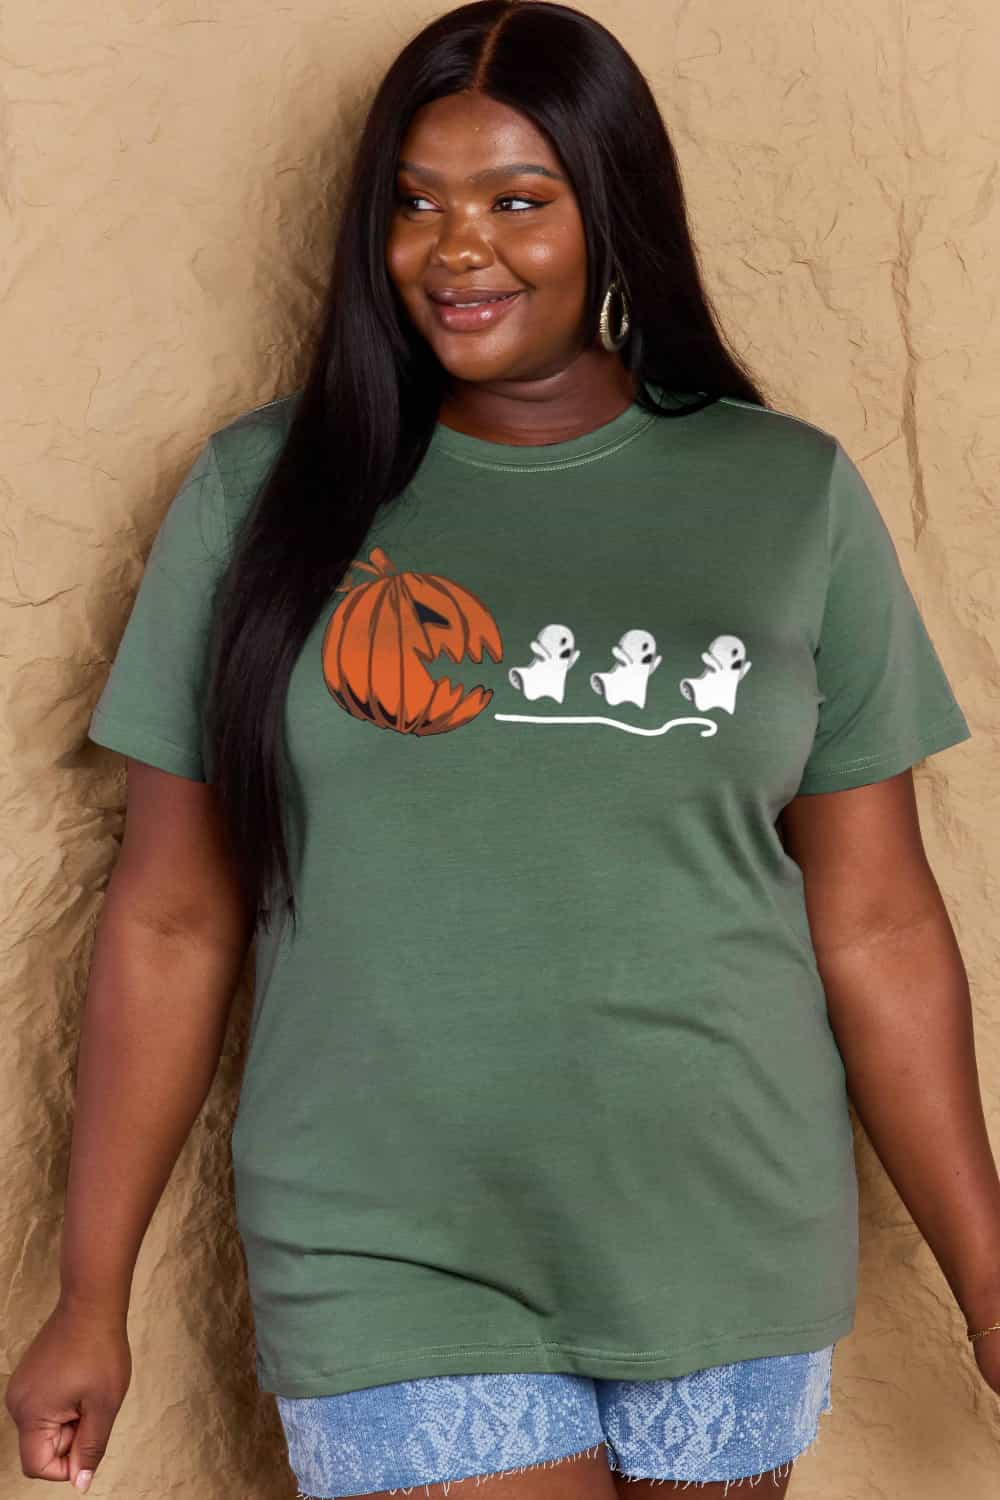 Simply Love Full Size Jack-O'-Lantern Graphic Cotton T-Shirt